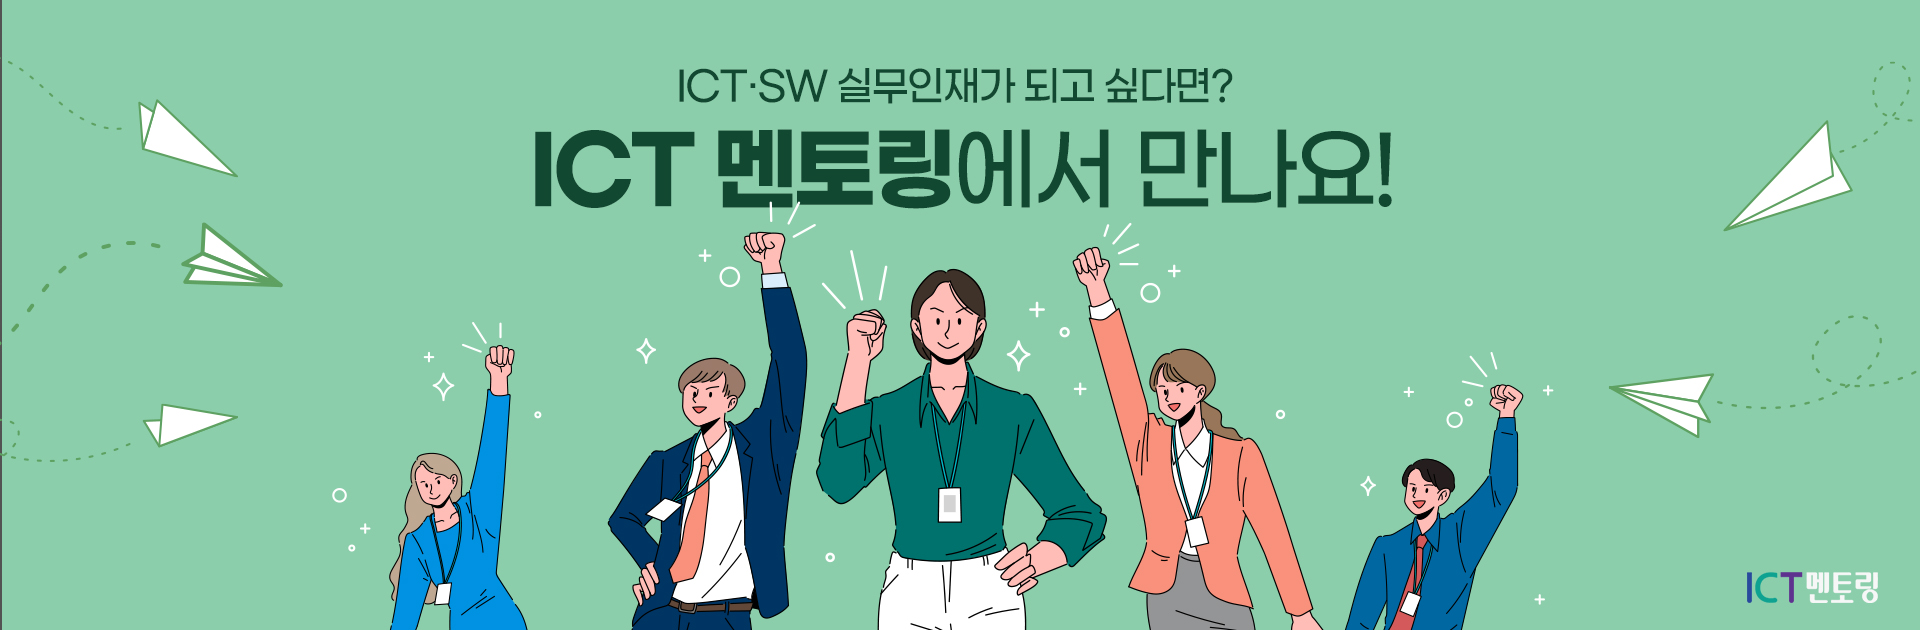 ICT SW 실무인재가 퇴고 싶다면? ICT 멘토링에서 만나요!